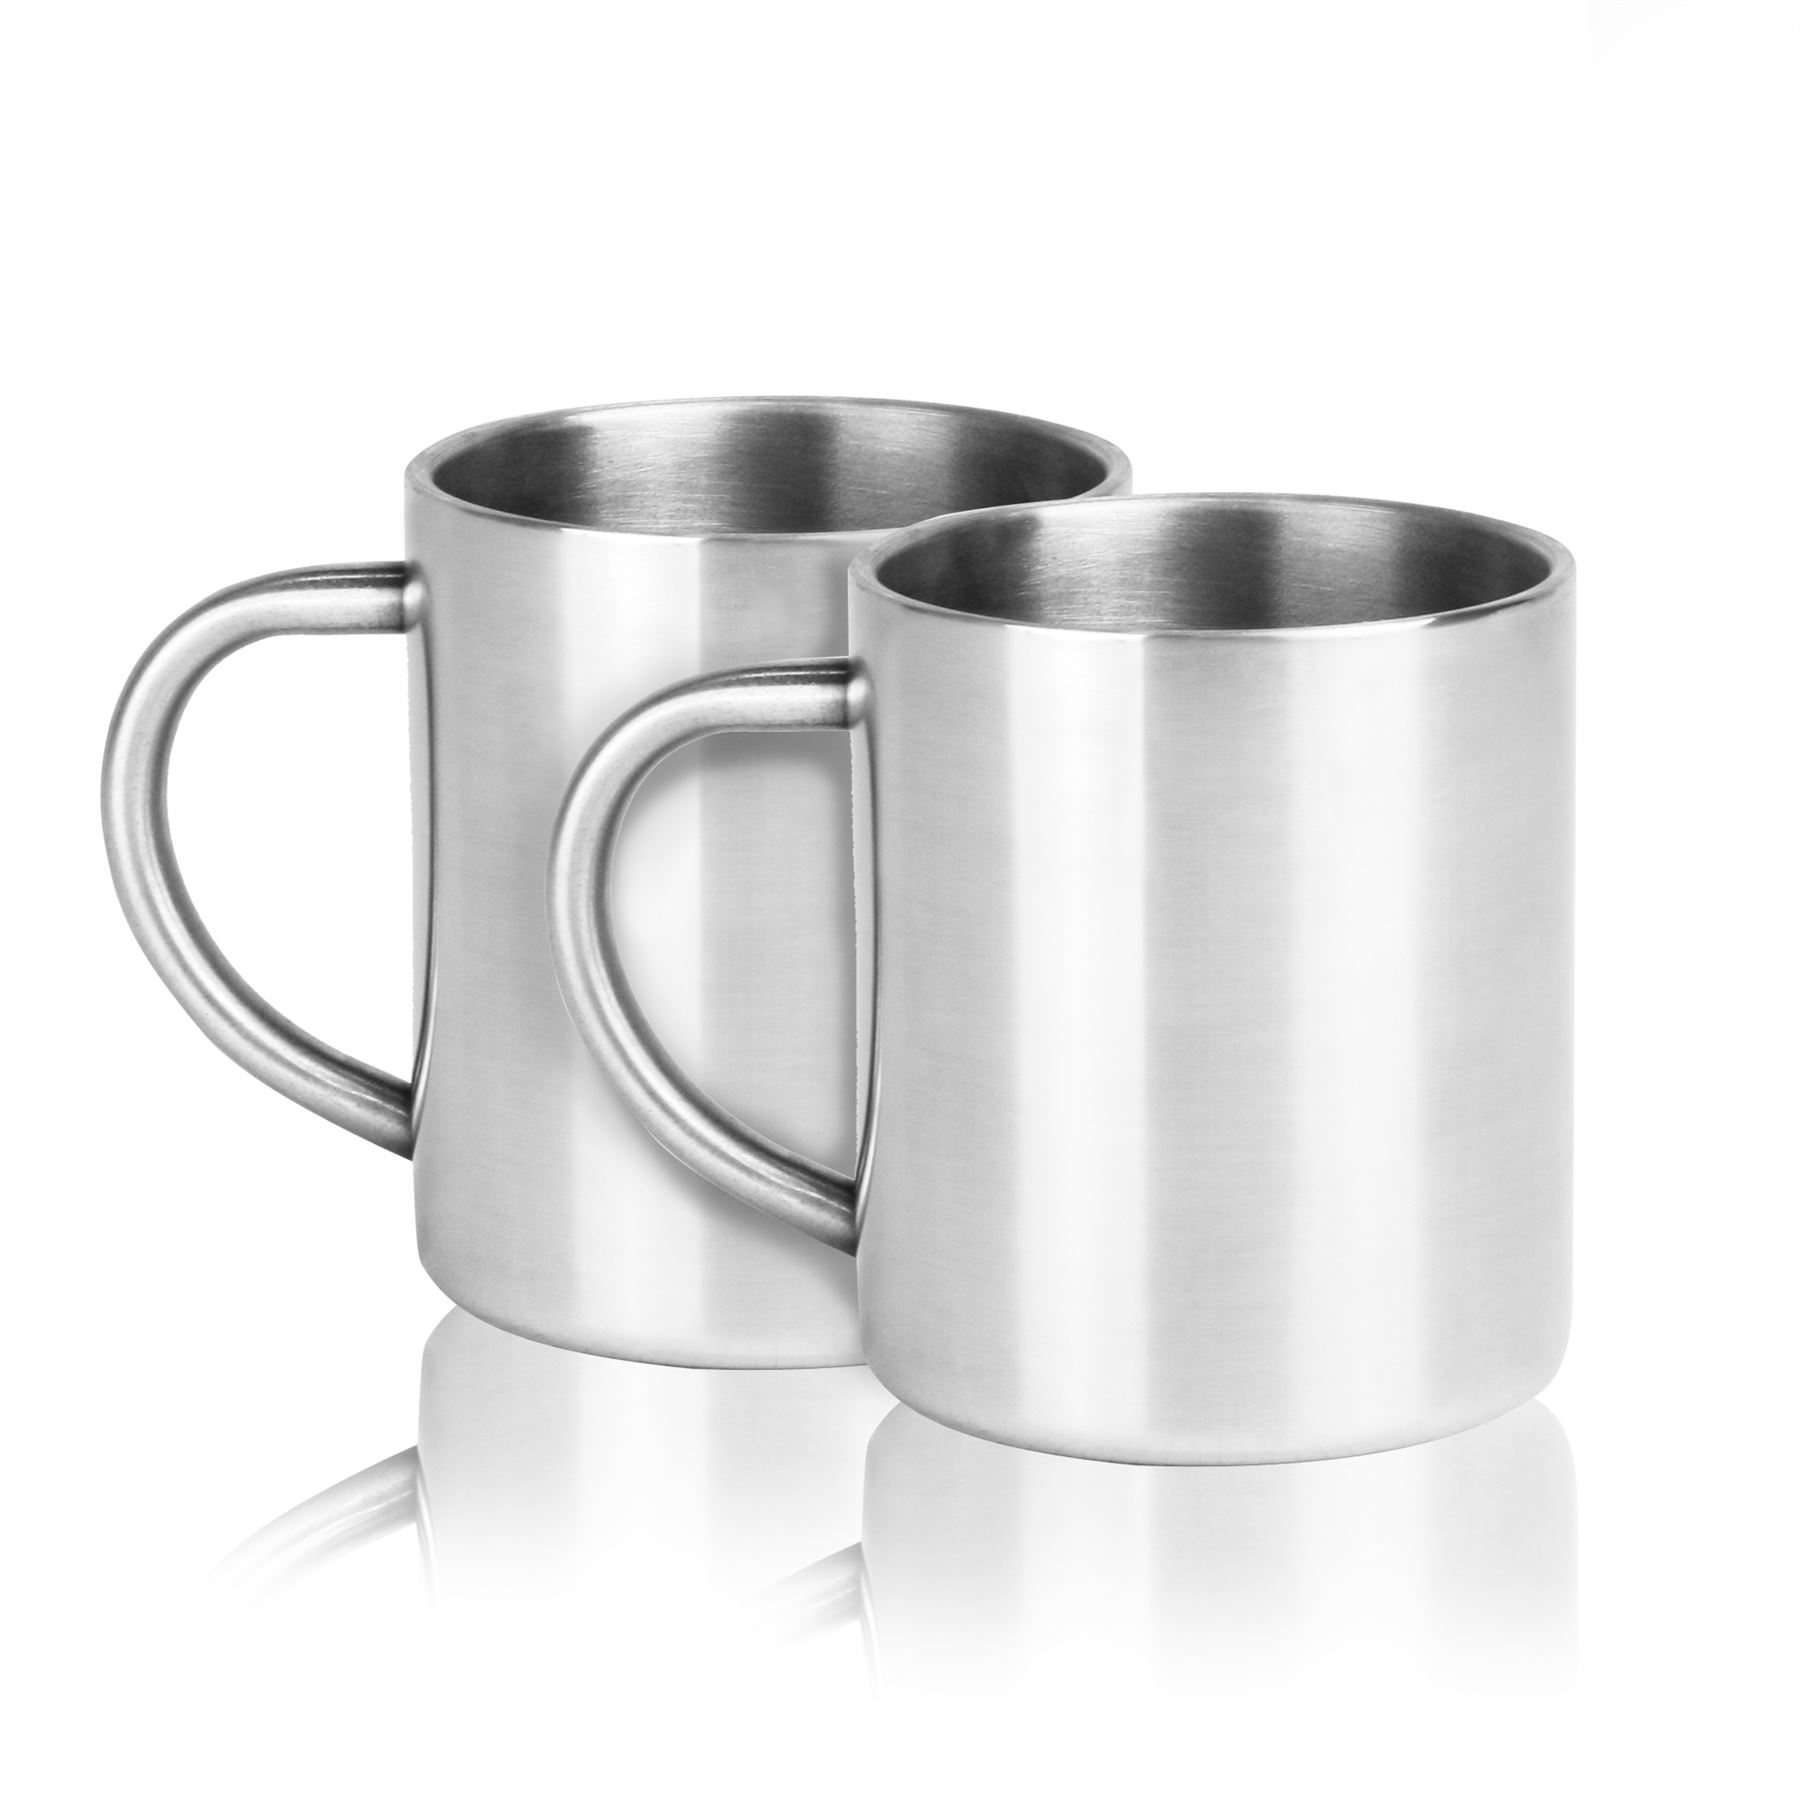 Stainless Steel Mugs - Set of 2 | M&W